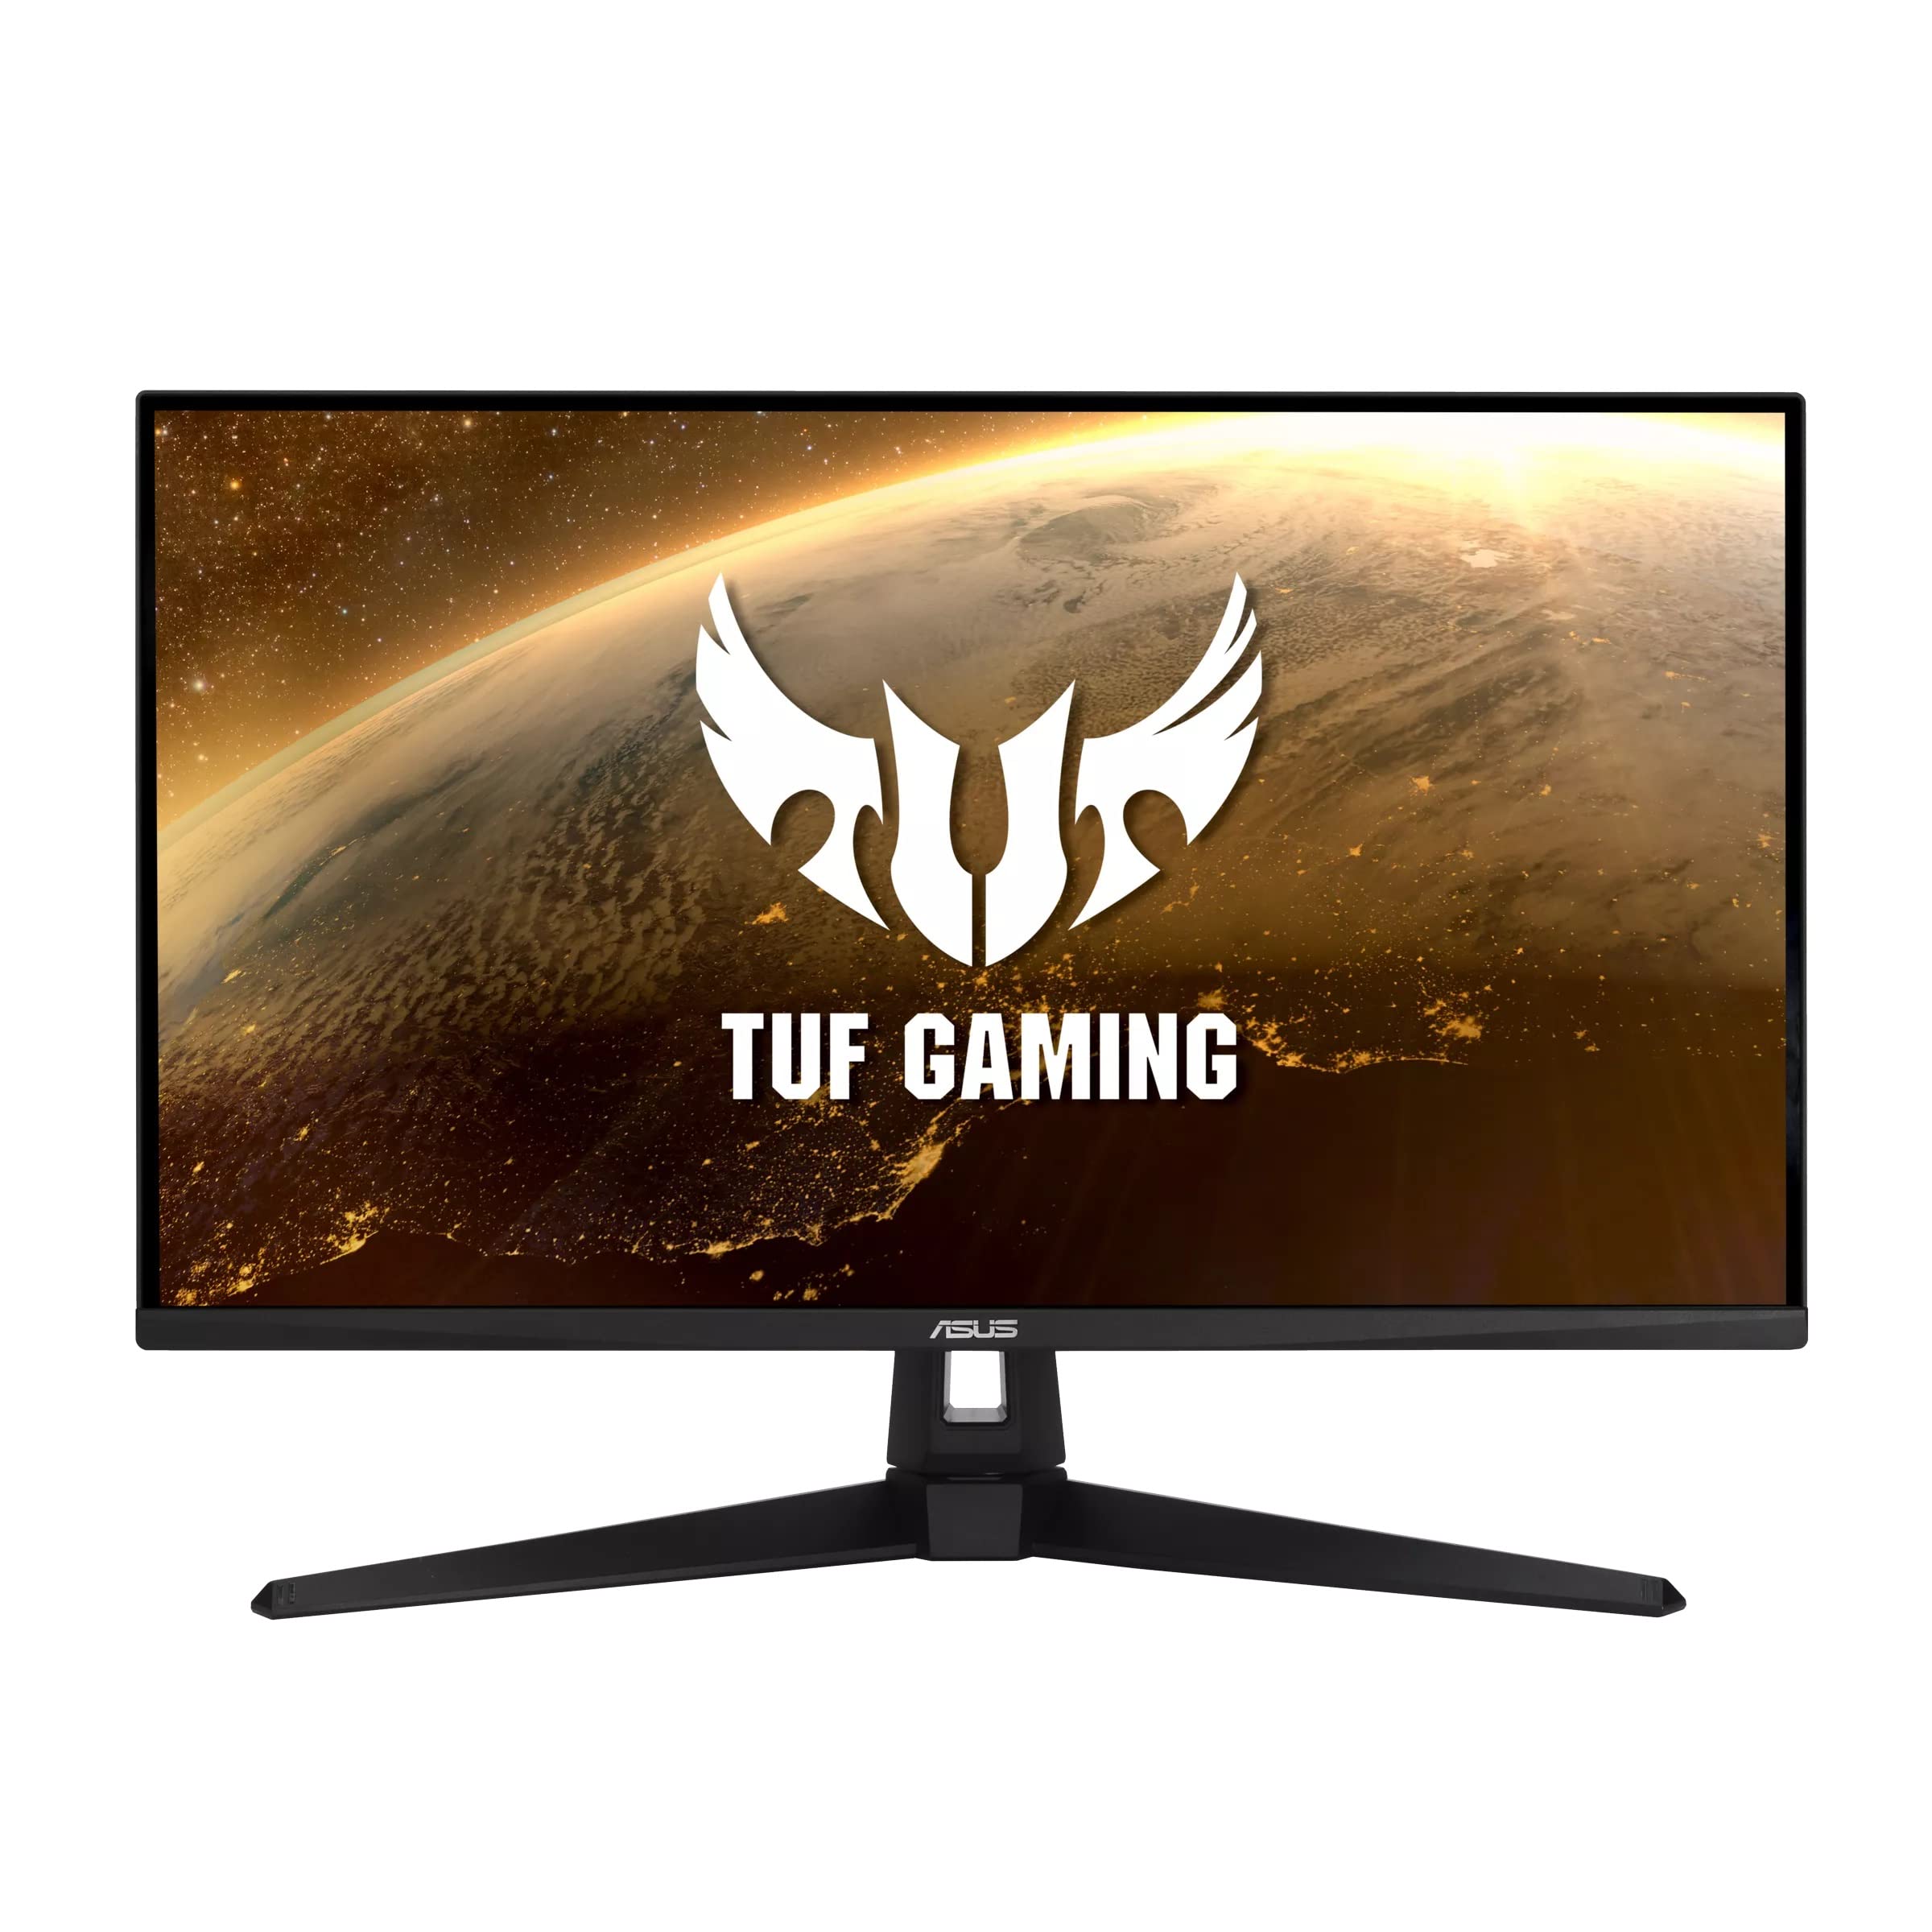 Asus Игровой монитор TUF Gaming VG289Q 28 HDR 4K (3840 x 2160)